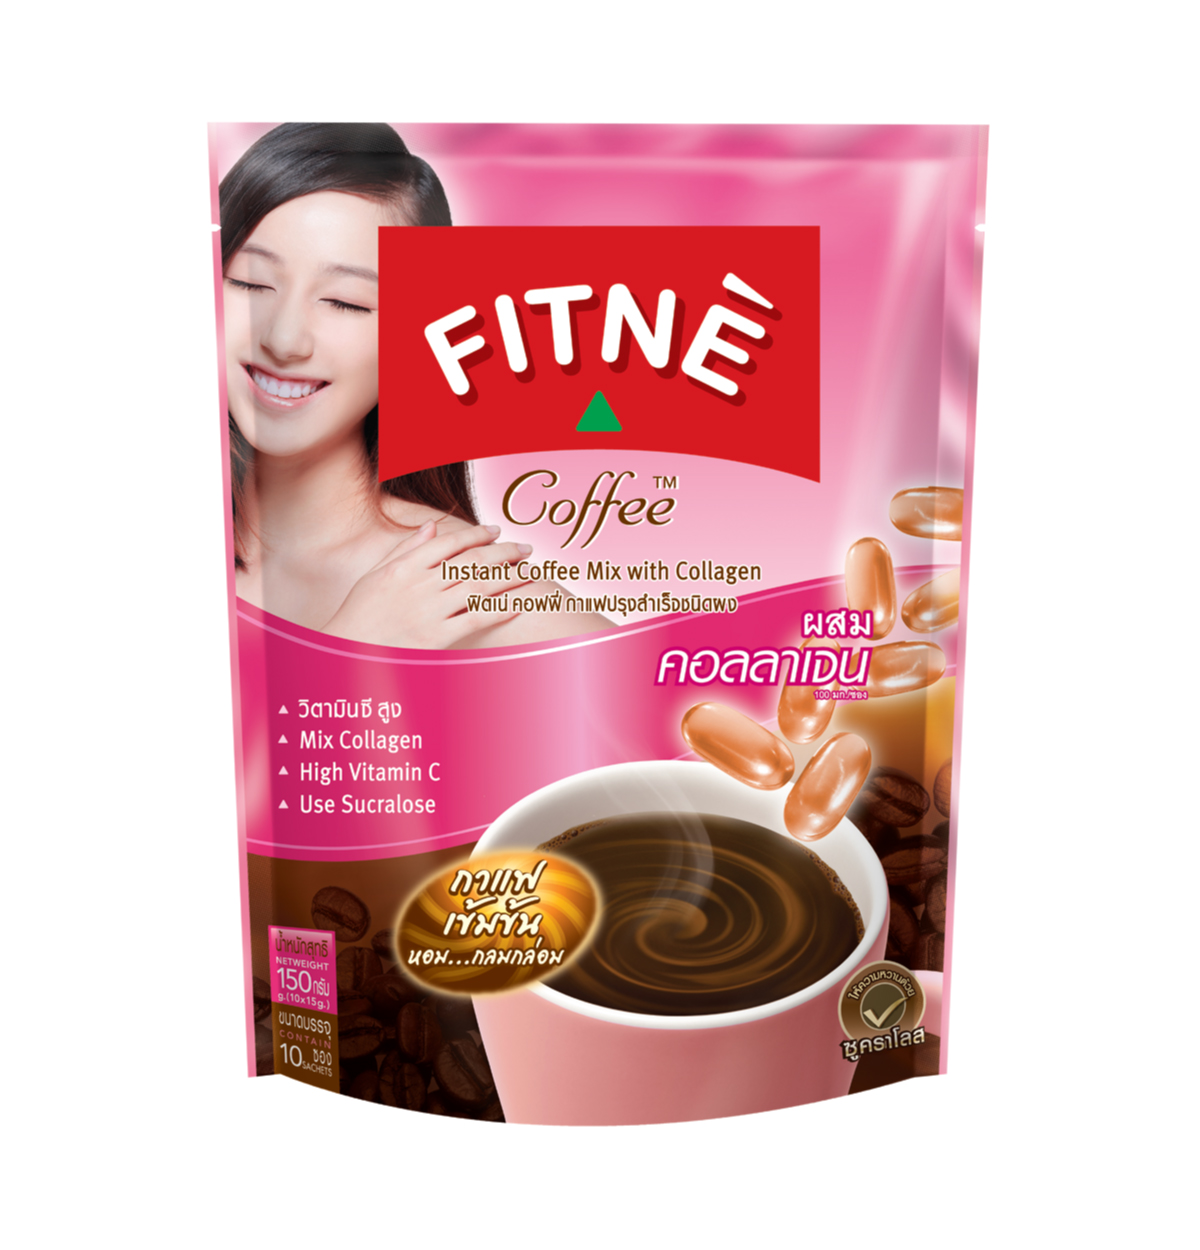 FITNE' Coffee Instant Coffee Mix with Collagen 15g.x10 Sticks